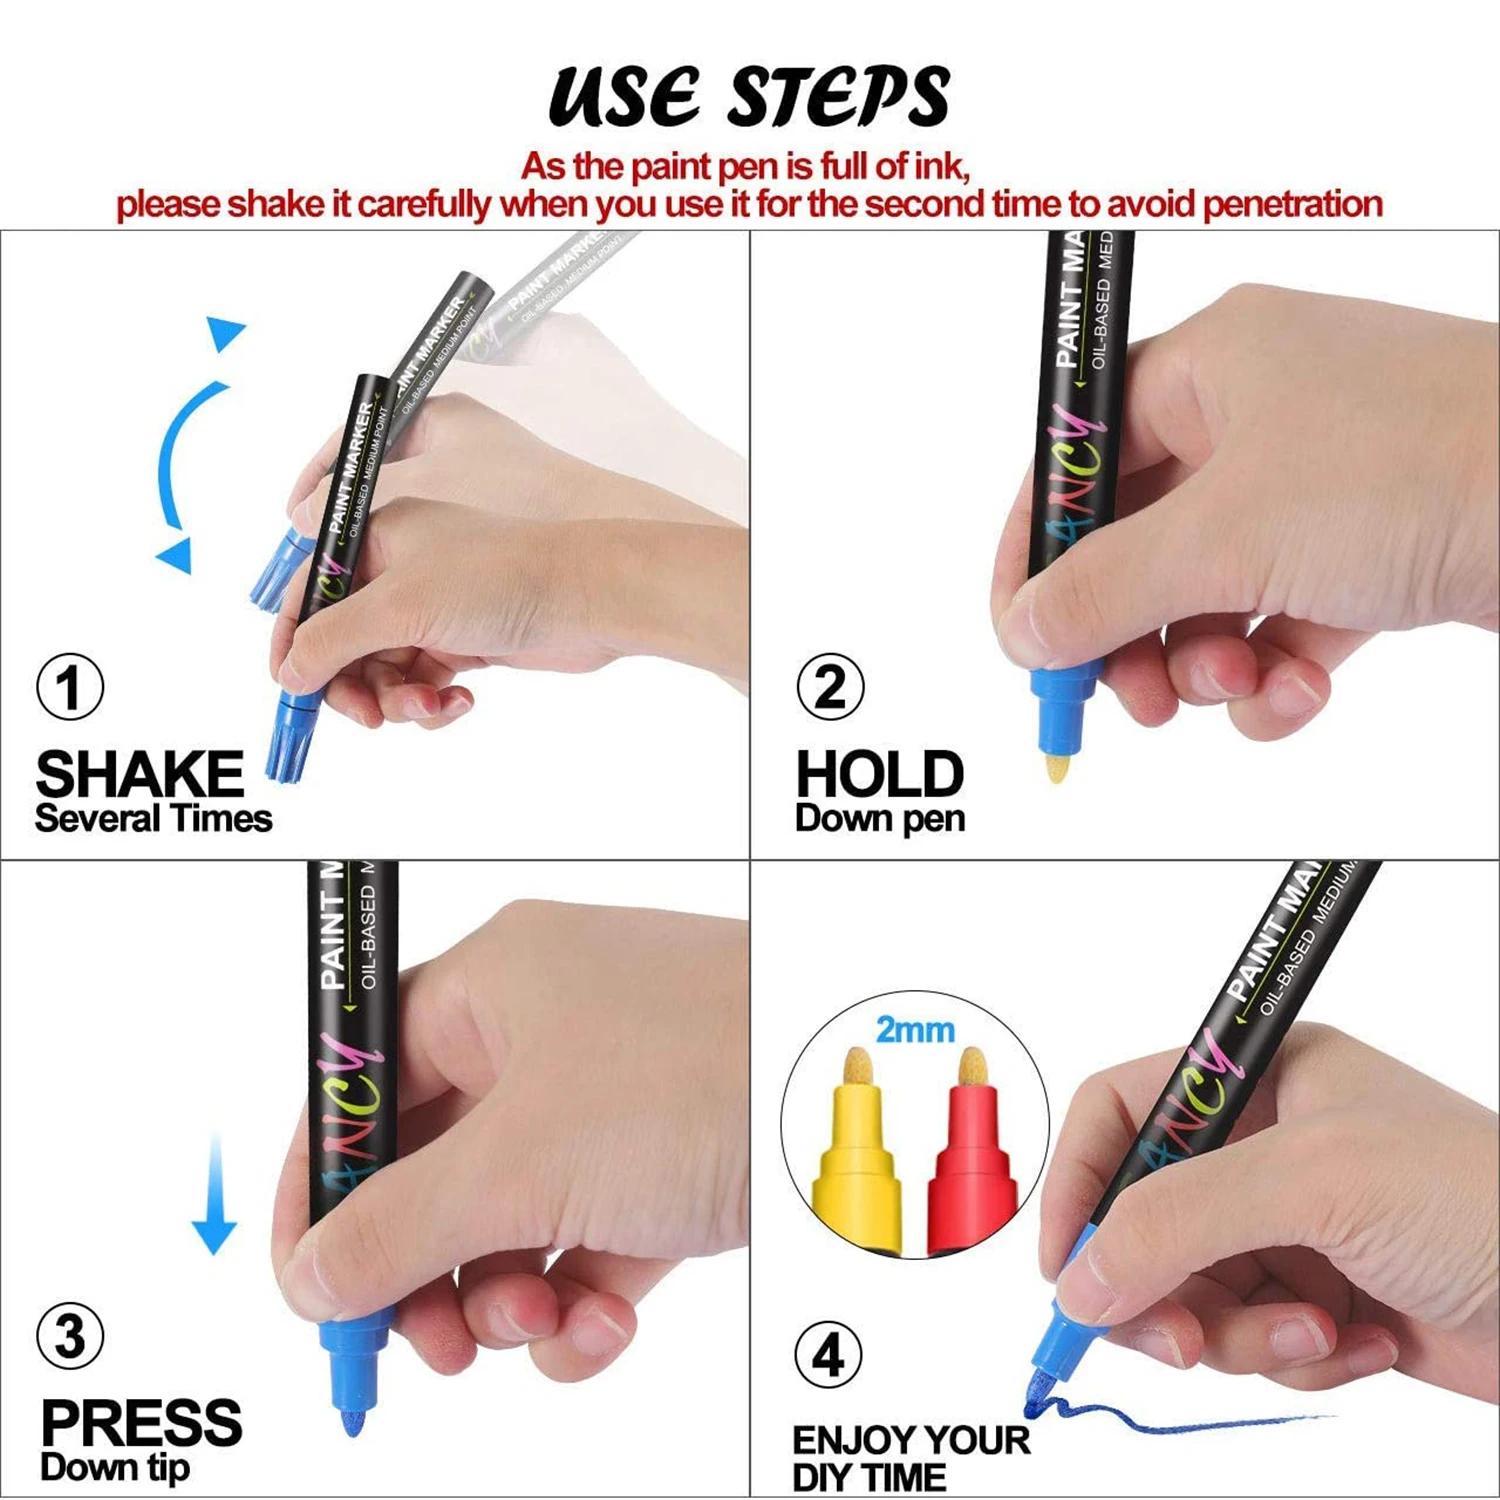 https://ae01.alicdn.com/kf/S0025e7a4ac1d4af3a293bd46d3117d5bK/Paint-Pens-20-Colors-Paint-Markers-Oil-Based-Painting-Pen-Set-for-Rocks-Painting-Wood-Plastic.jpg